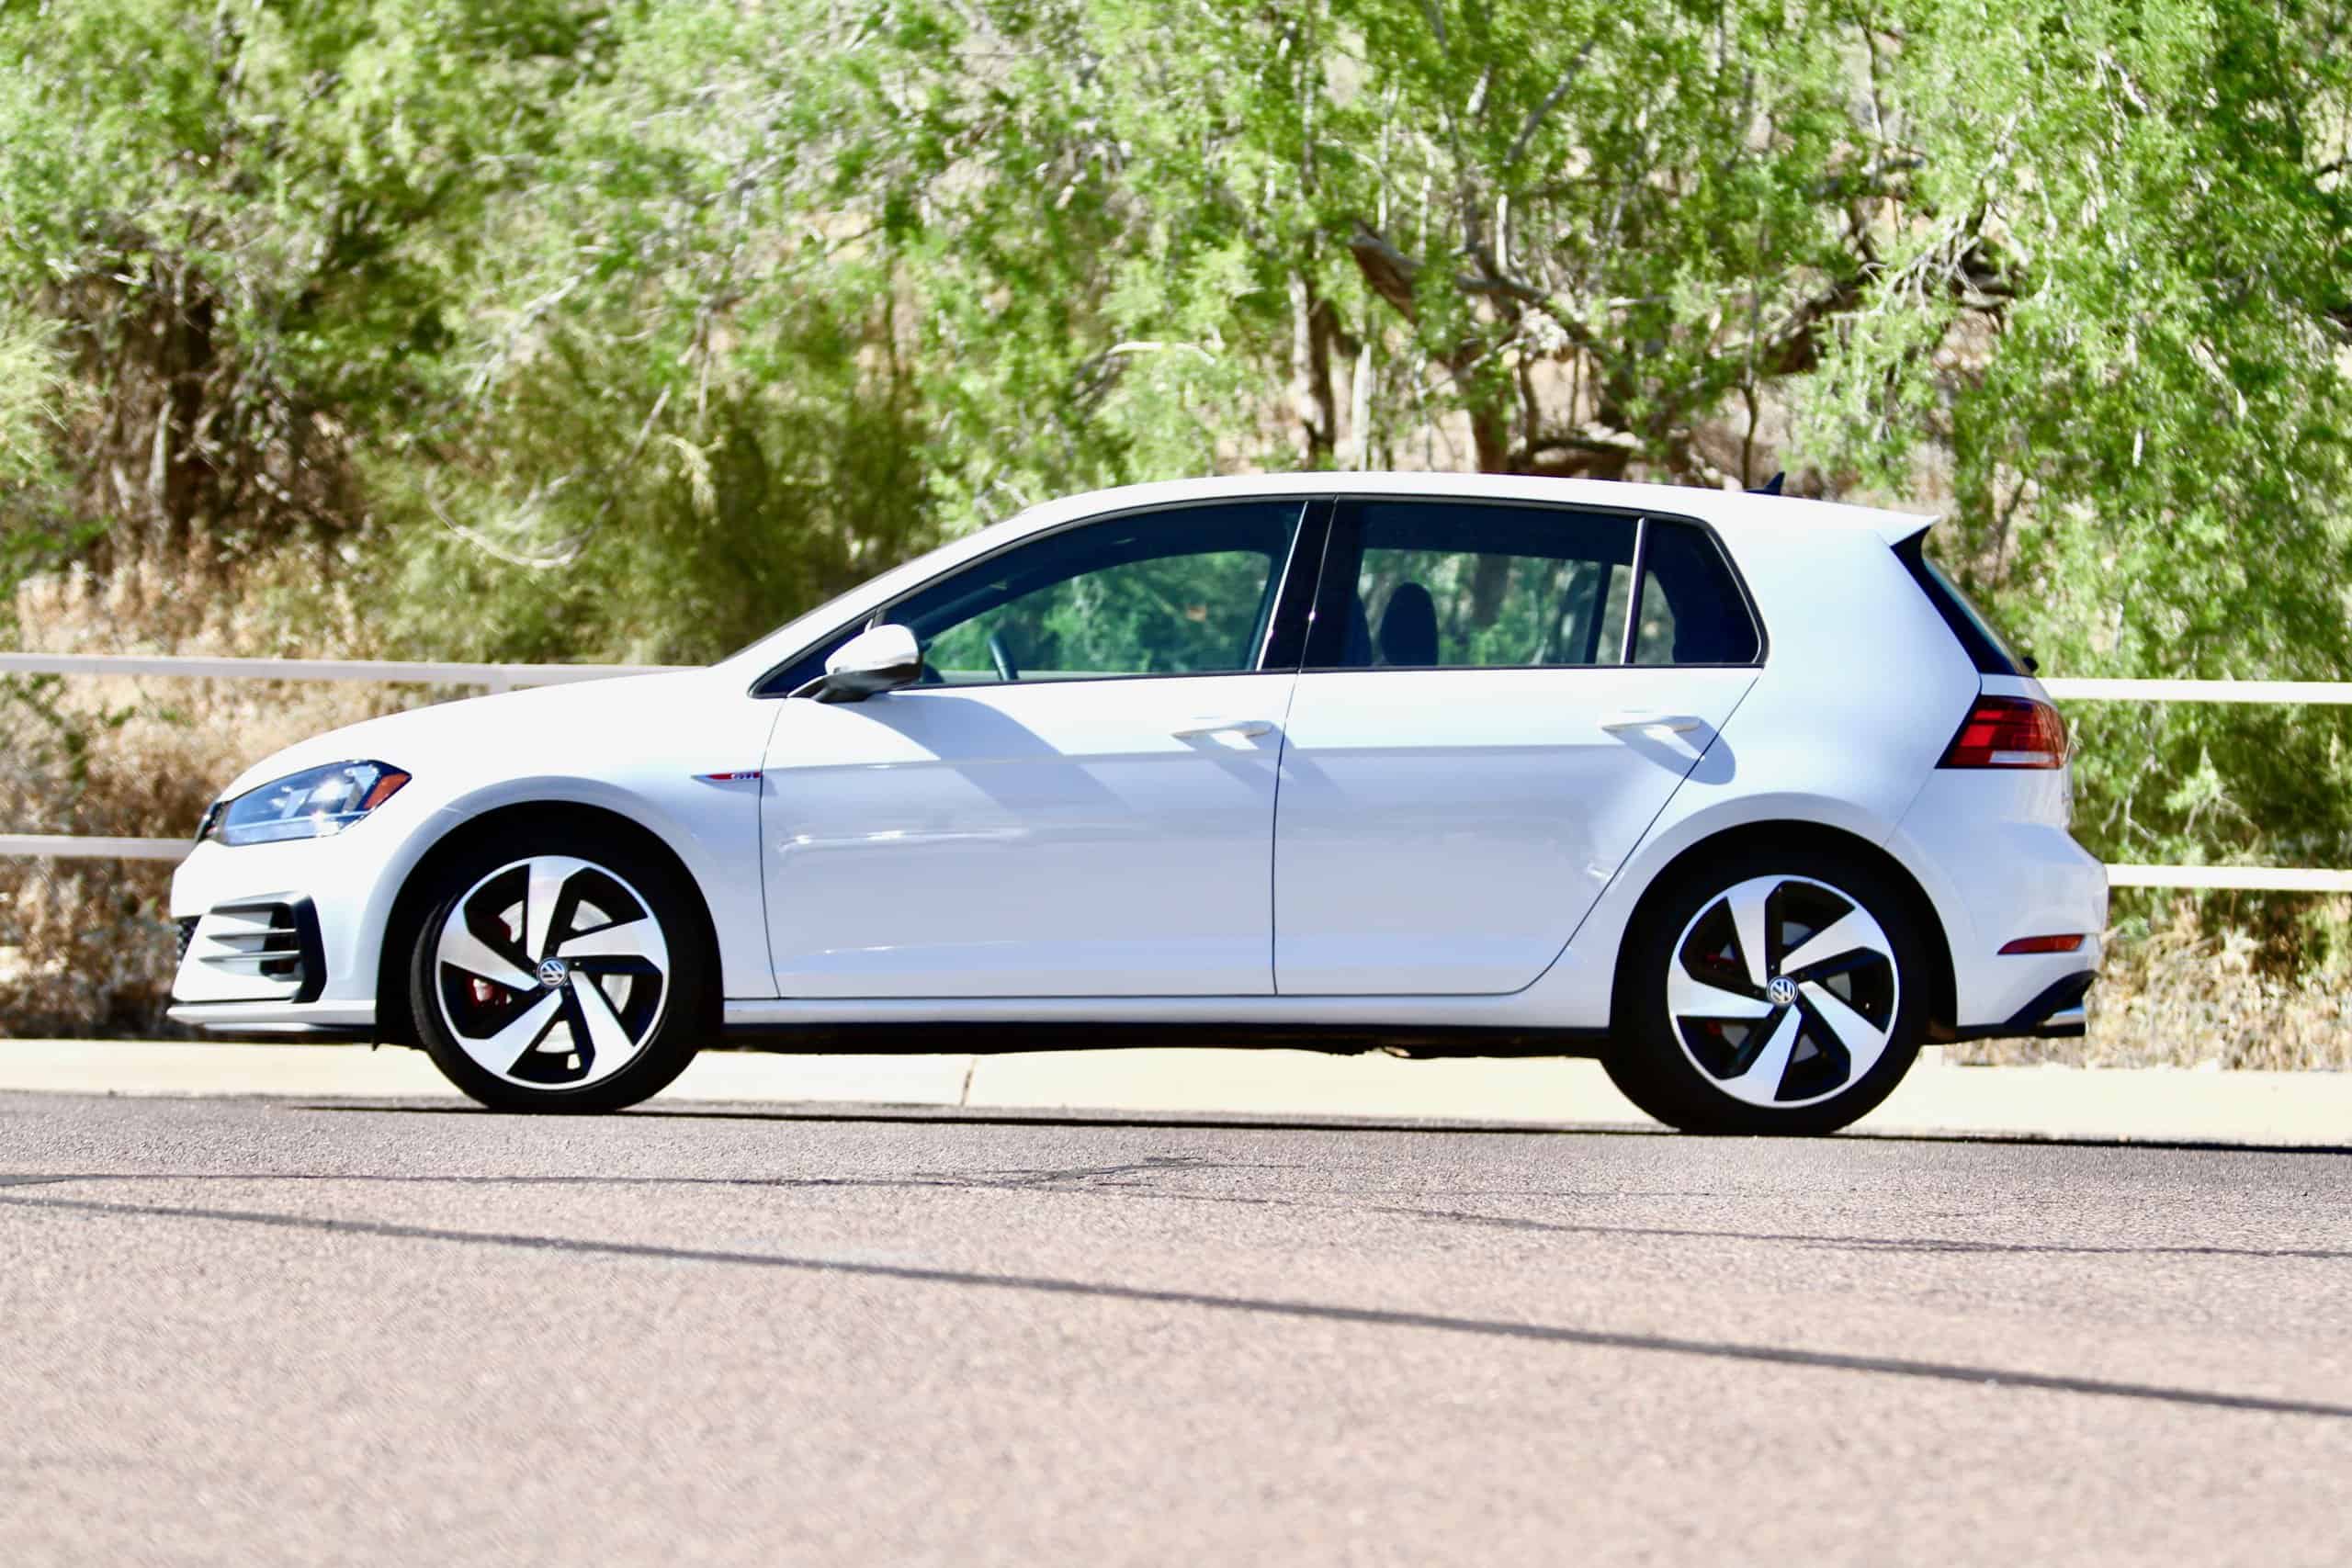 VW SCCA, Driven: 2020 VW Golf GTi, ClassicCars.com Journal